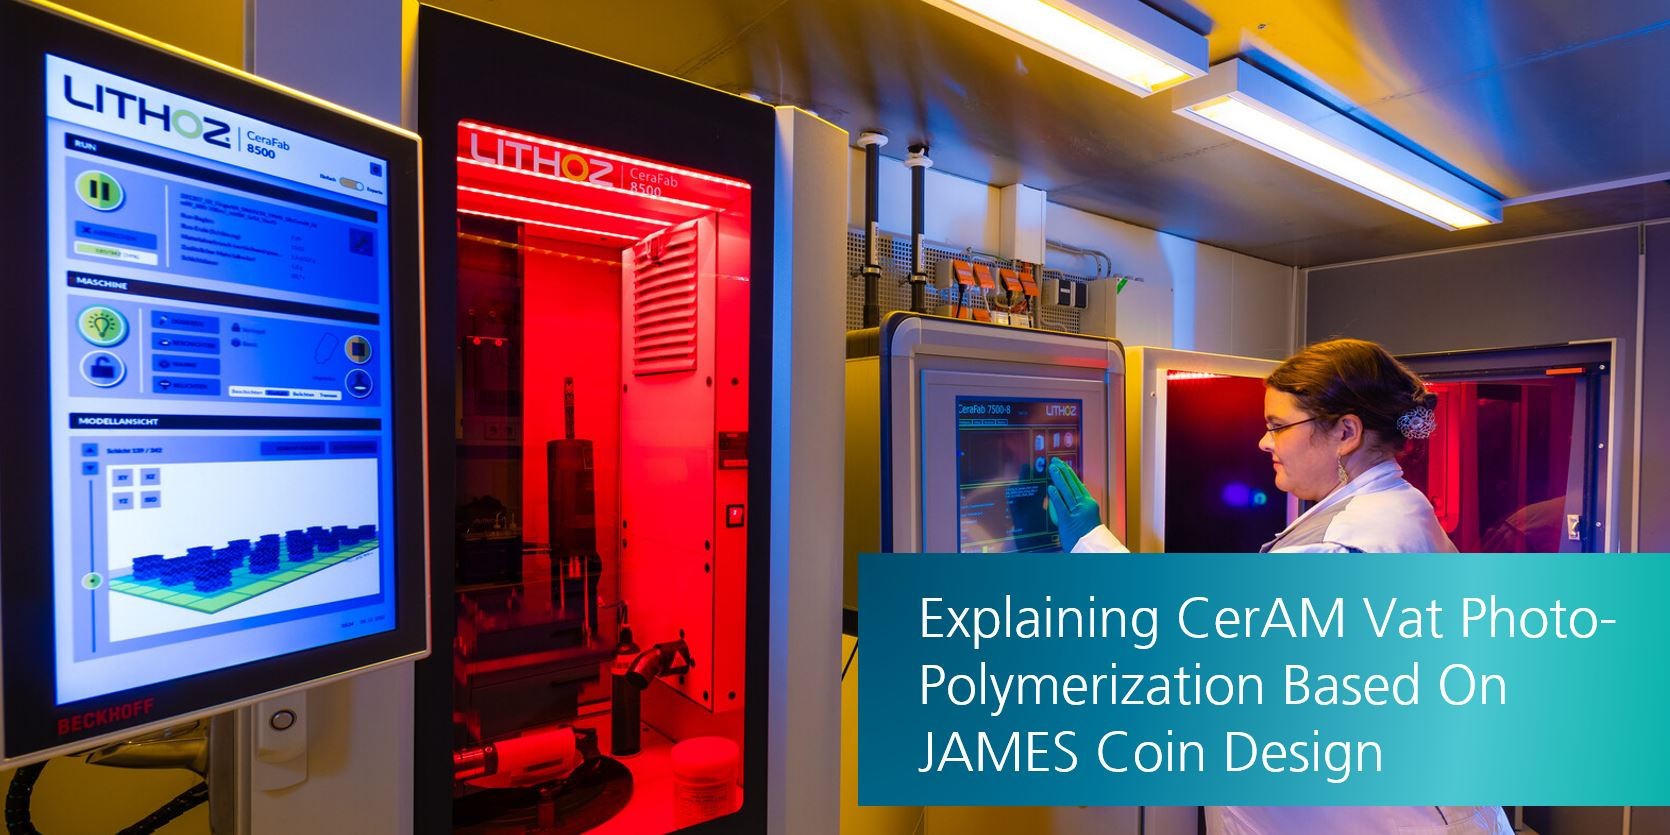 Explaining The CerAM Vat Photo Polymerization Based On JAMES Coin Design